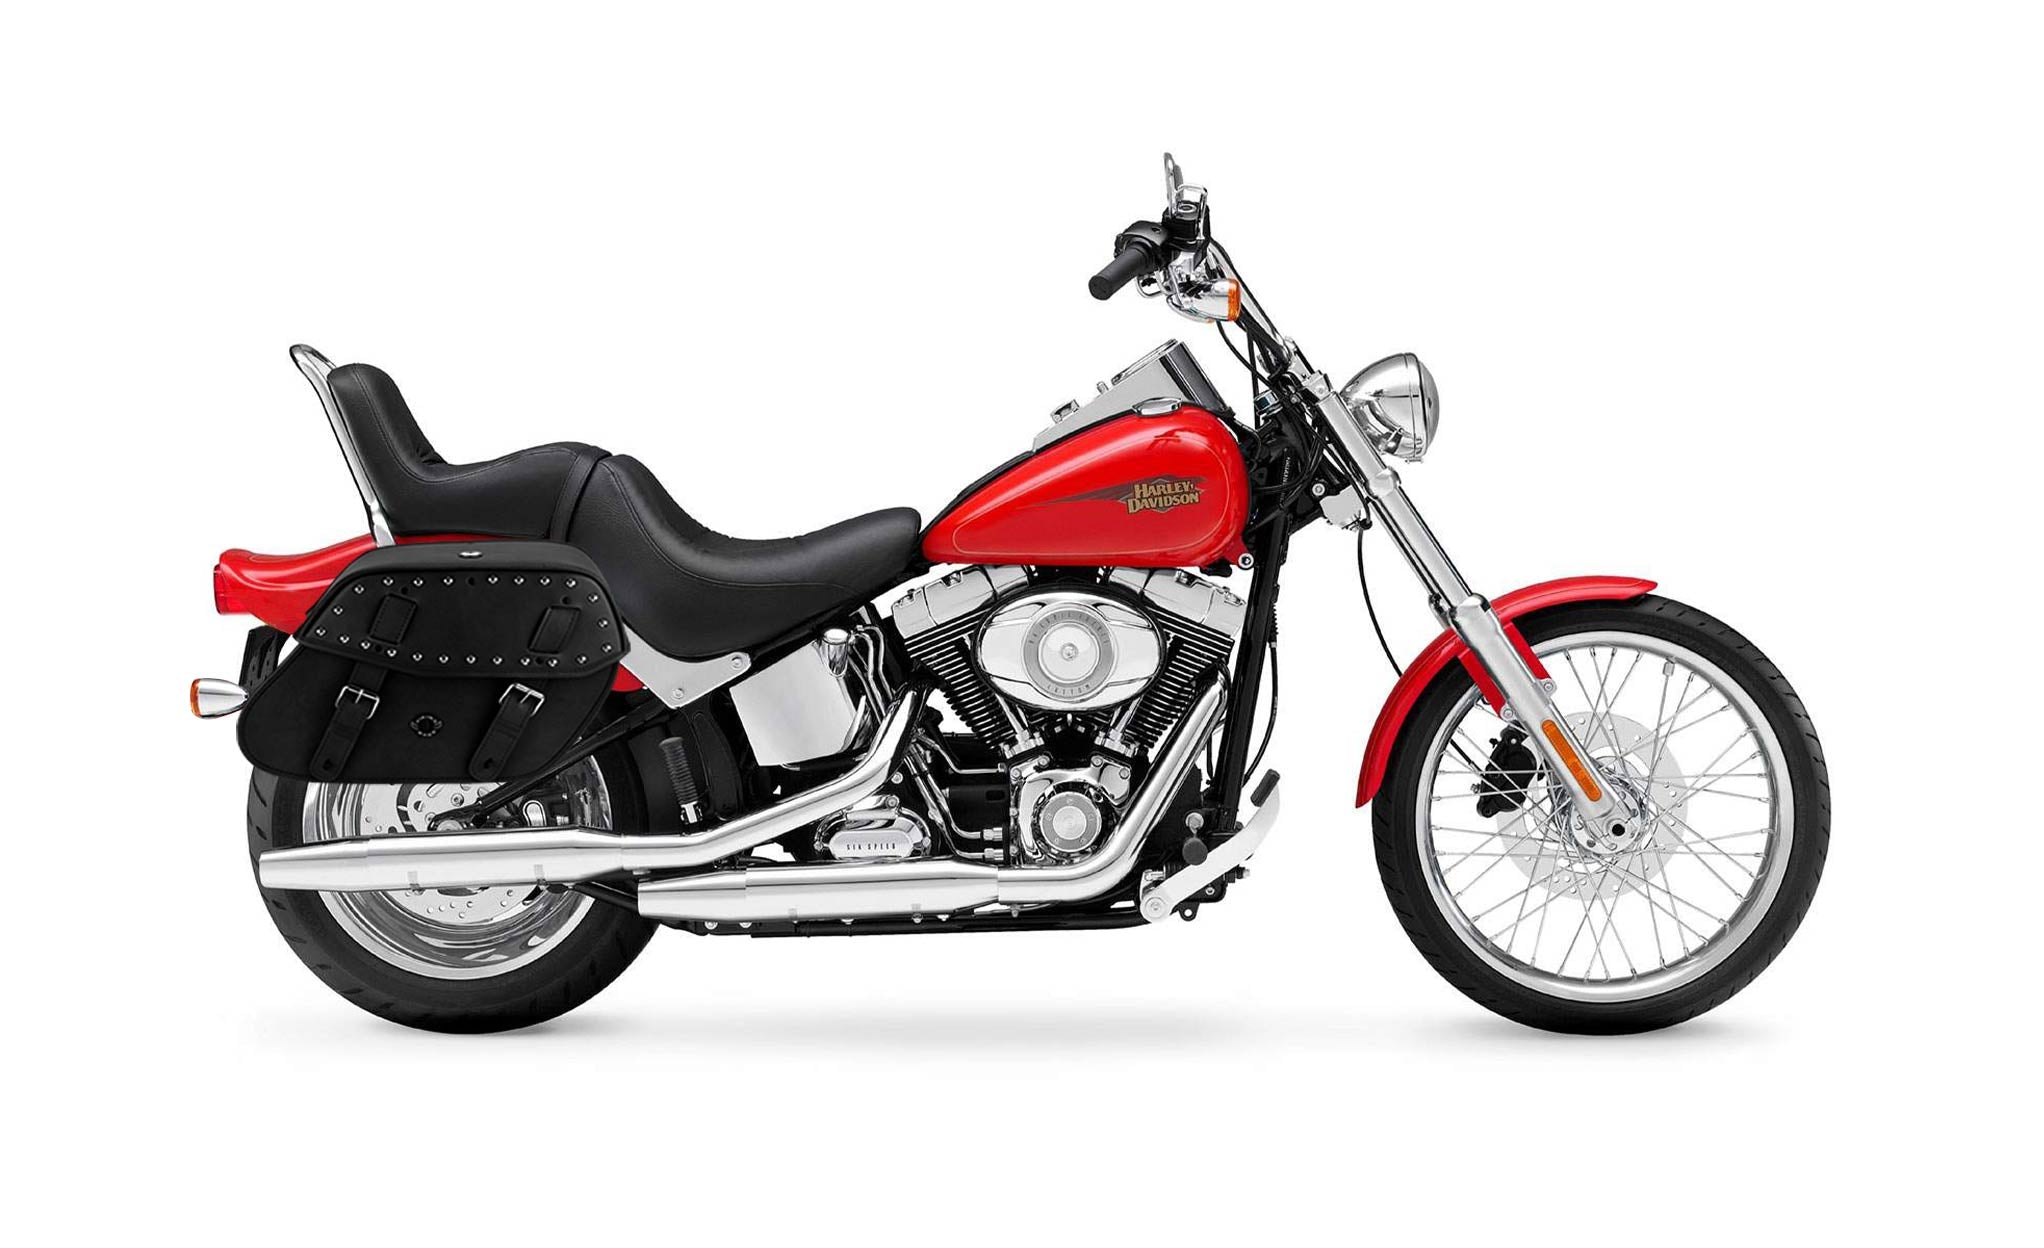 Viking Odin Large Studded Leather Motorcycle Saddlebags For Harley Softail Custom Fxstc on Bike Photo @expand